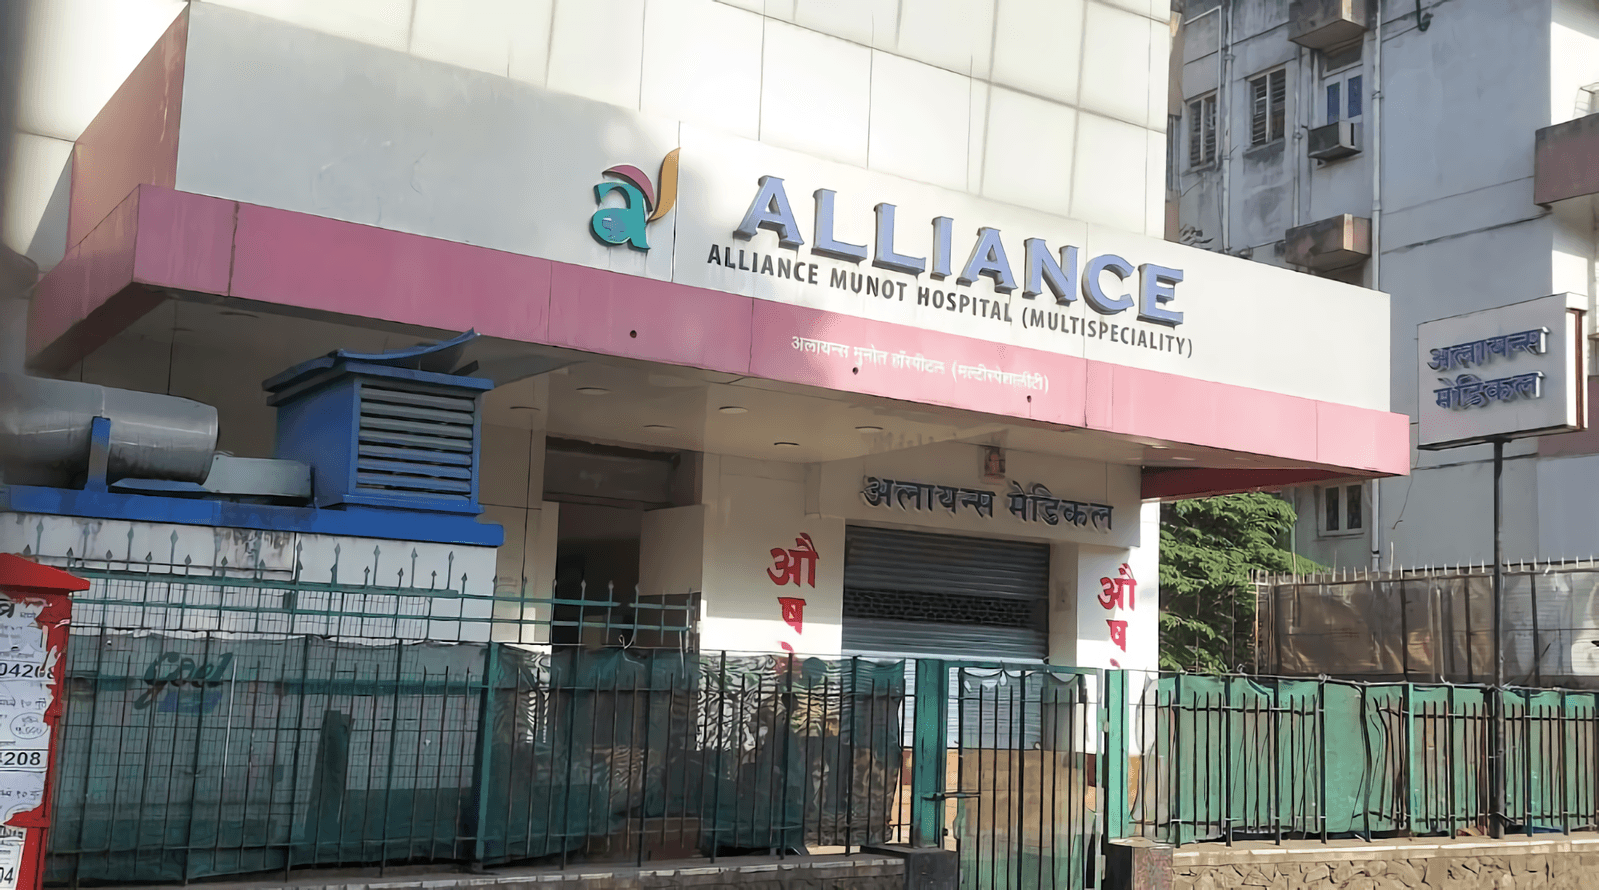 Alliance Munot Hospital